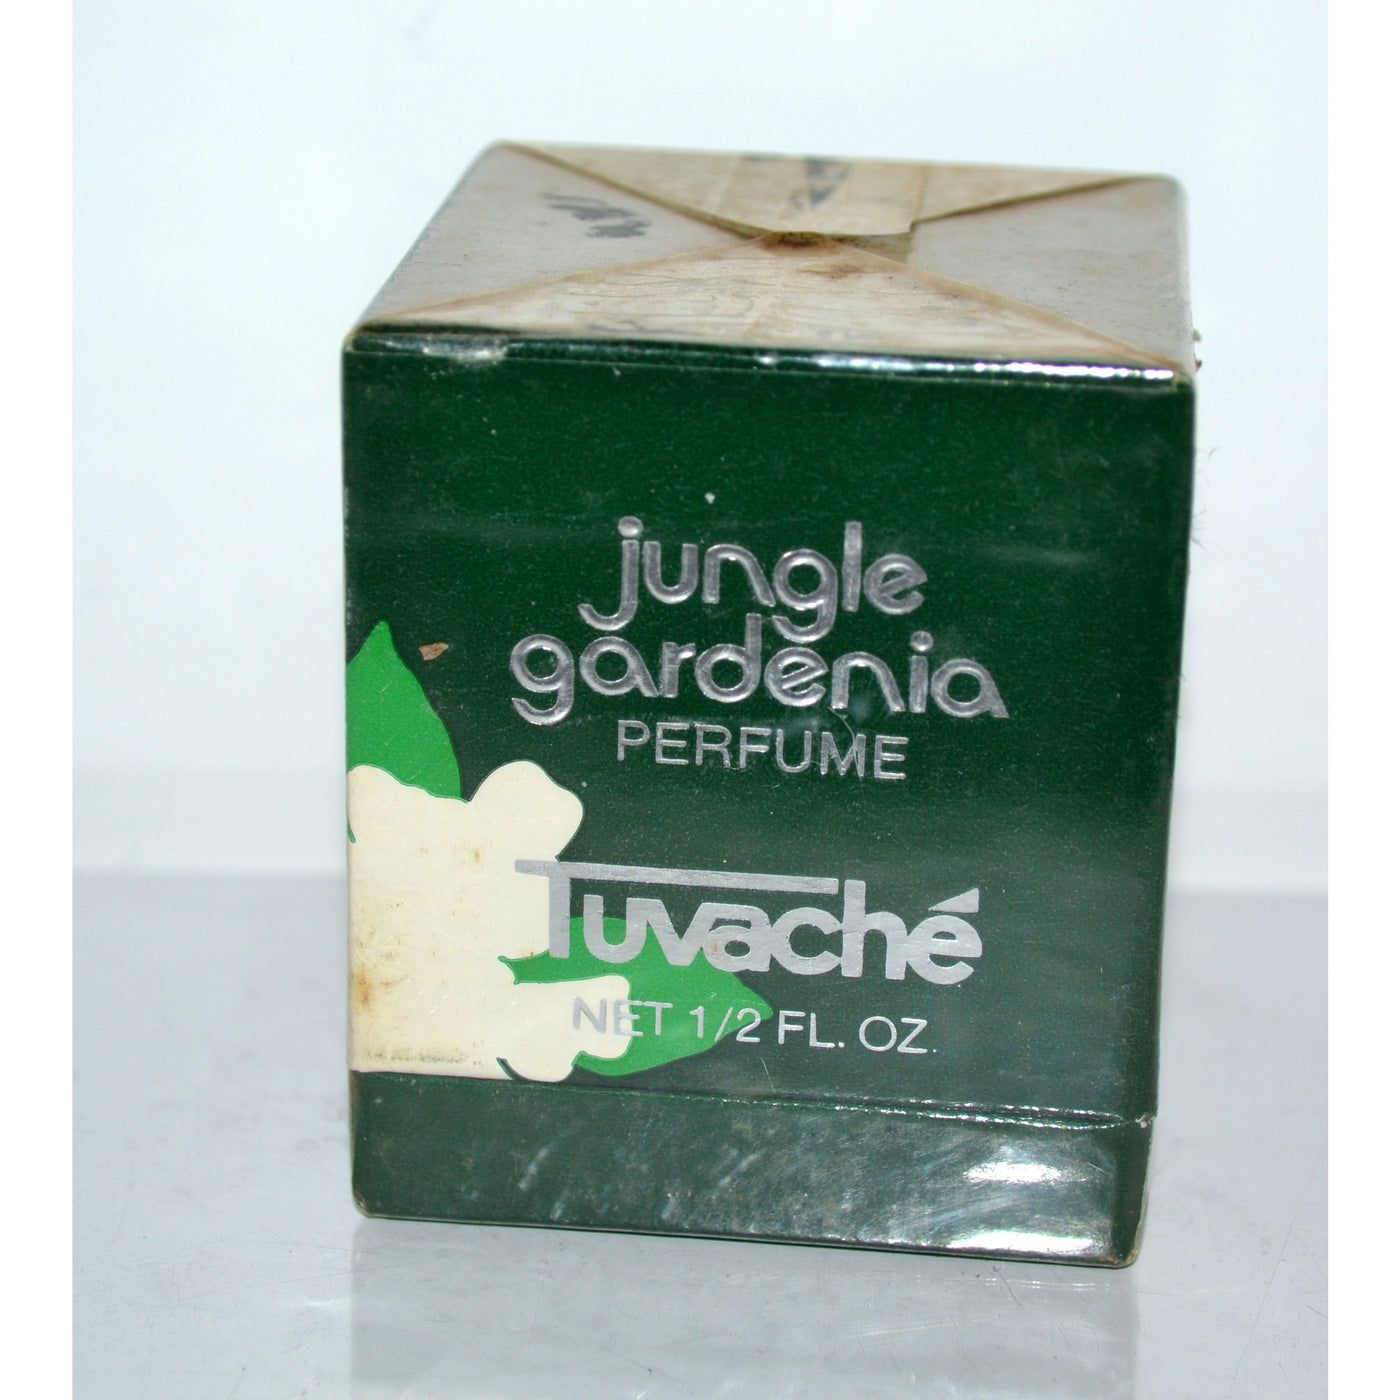 Vintage Tuvache Jungle Gardenia Perfume